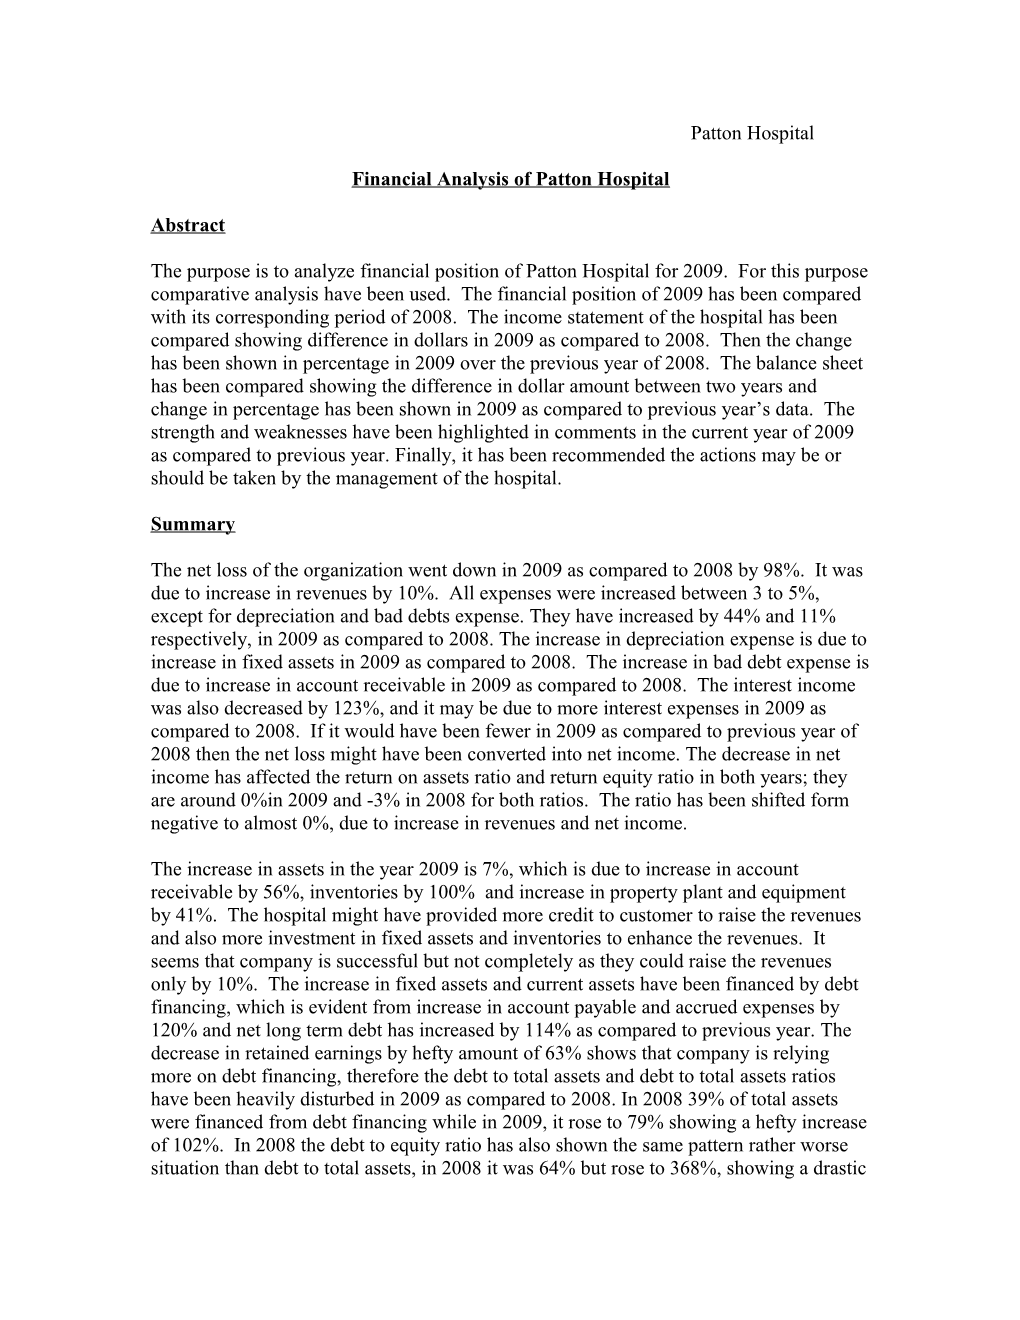 Financial Analysis of Pattonhospital